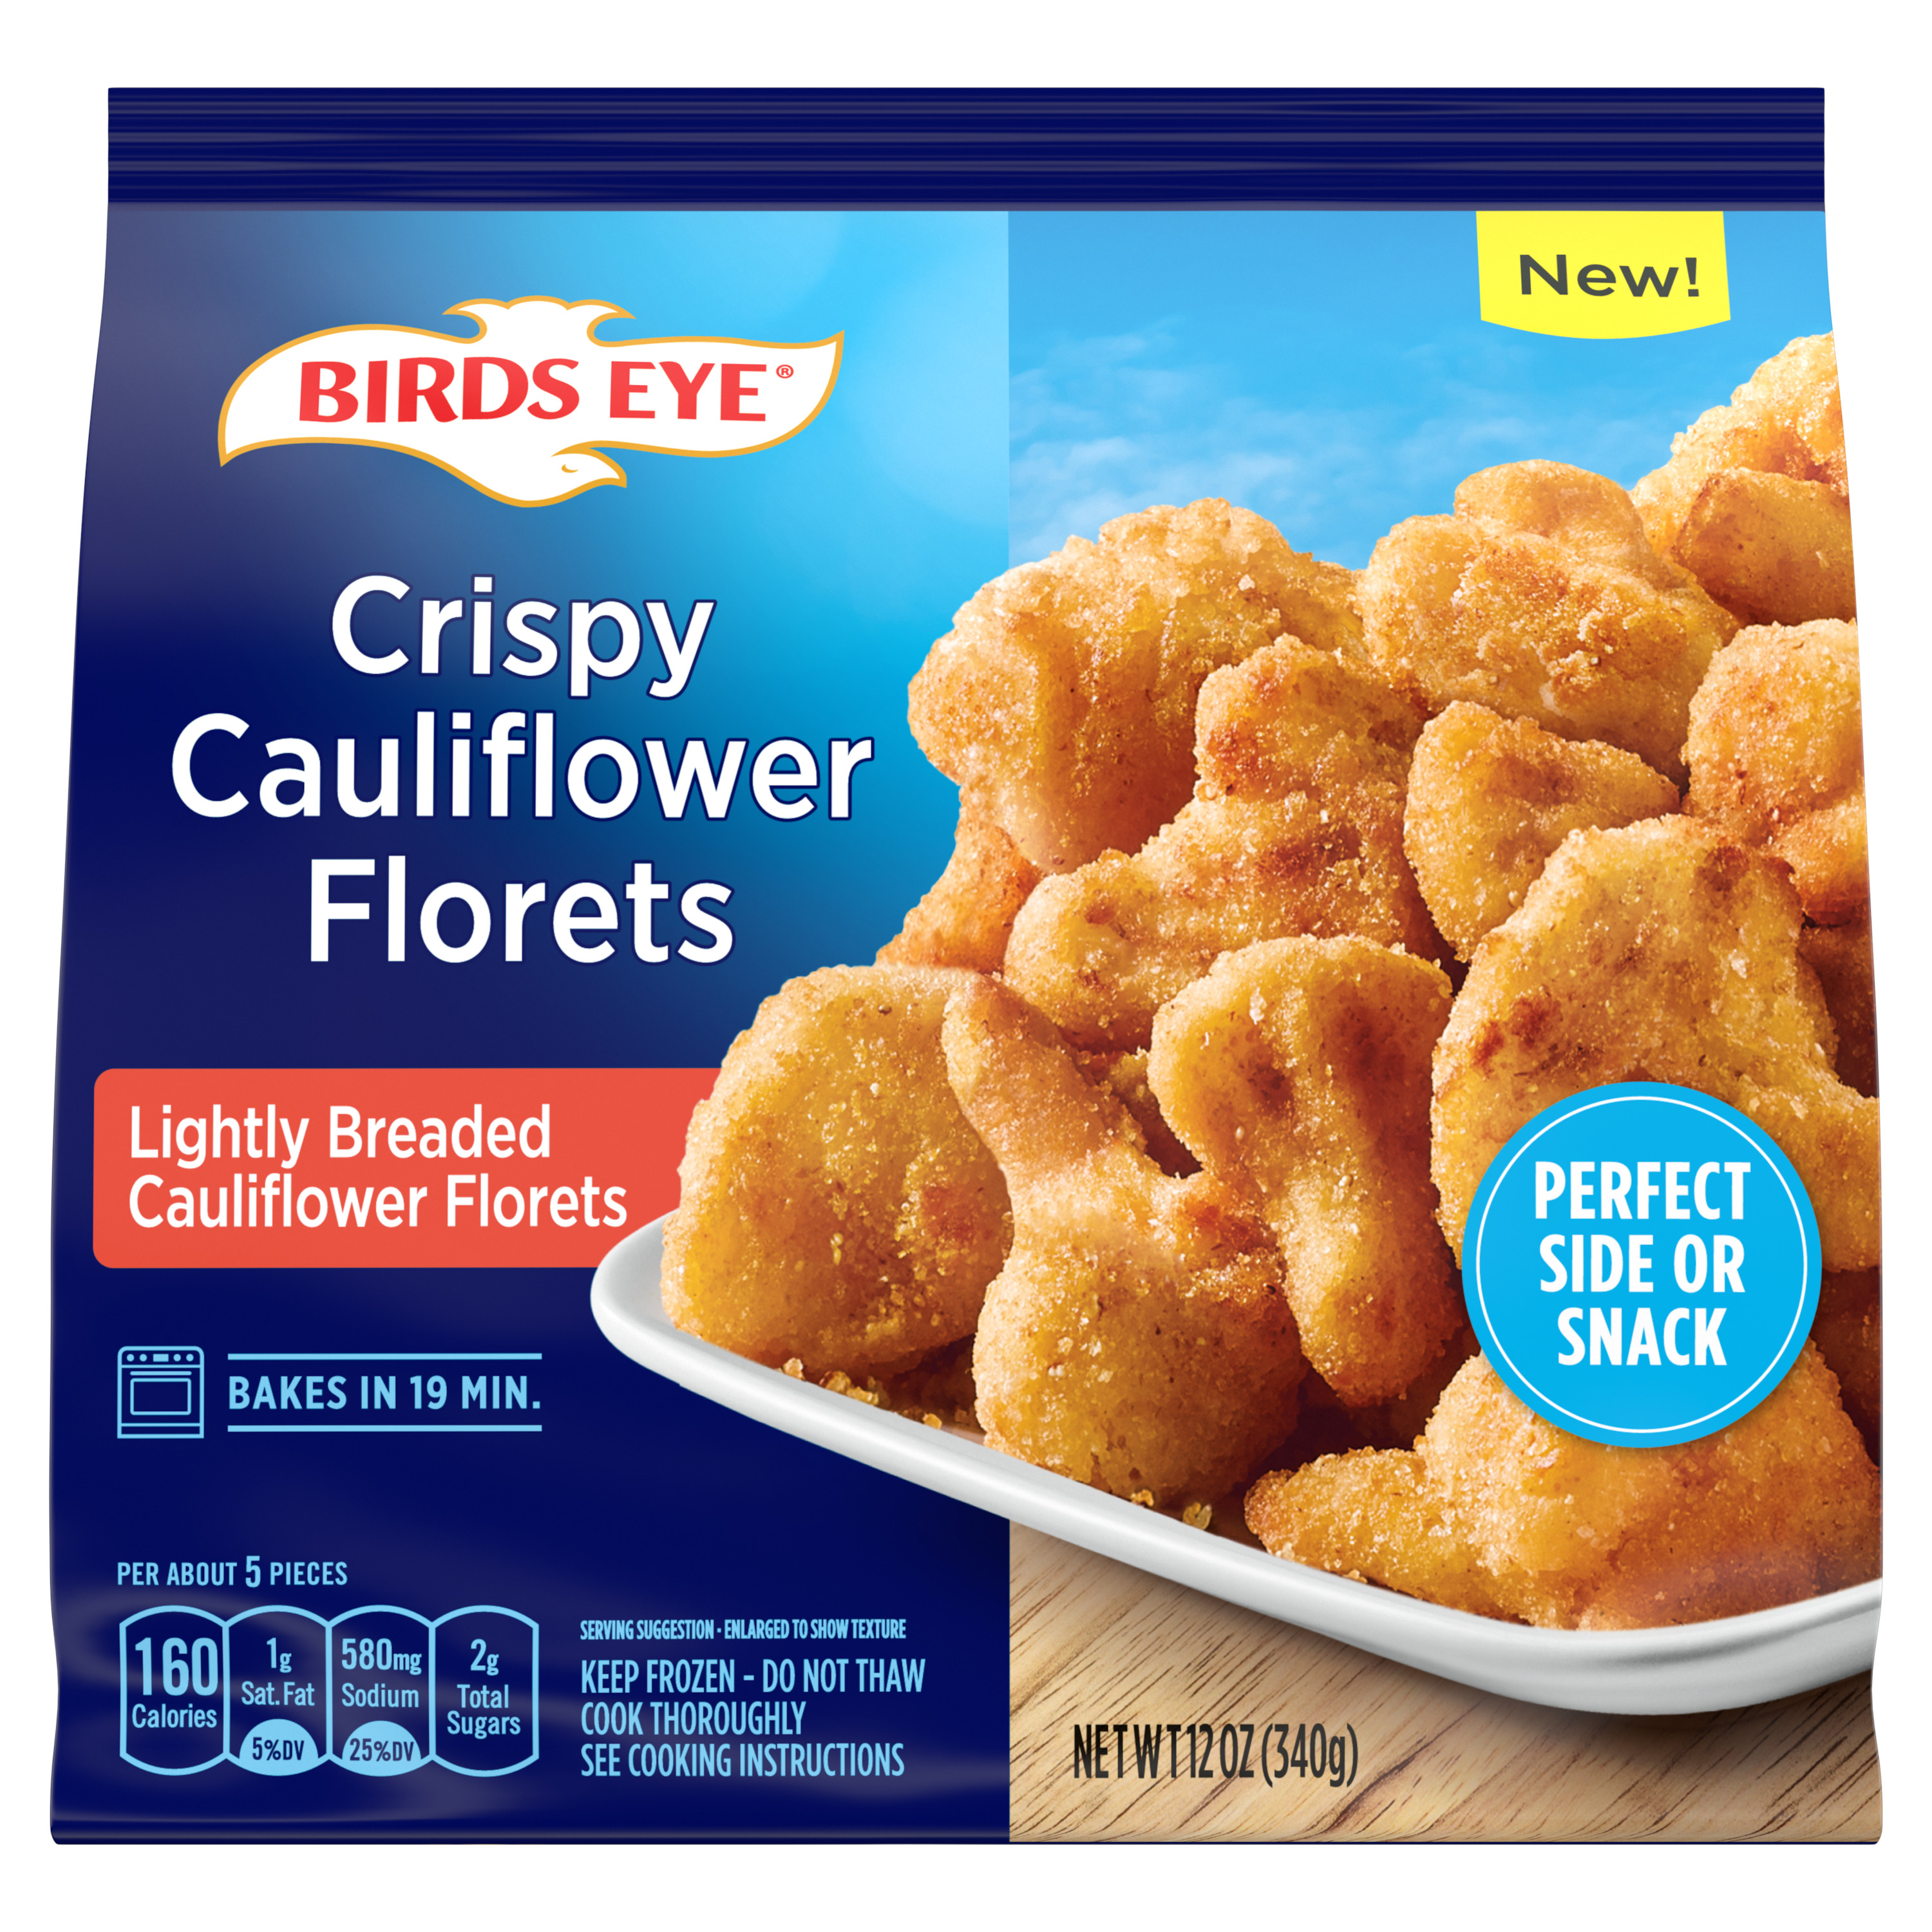 Crispy Cauliflower Florets